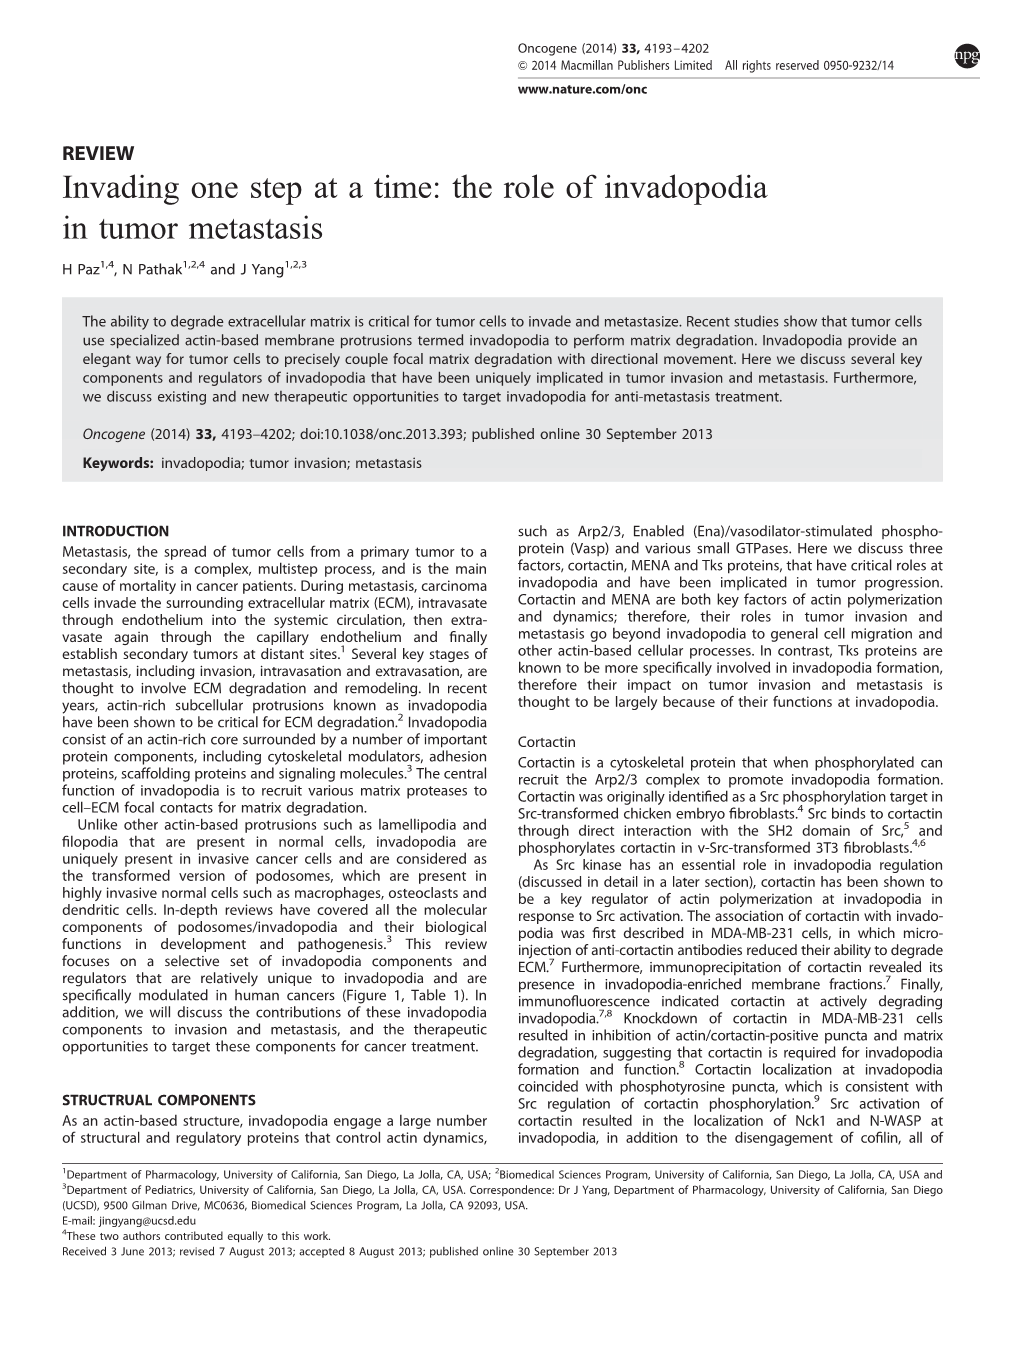 The Role of Invadopodia in Tumor Metastasis